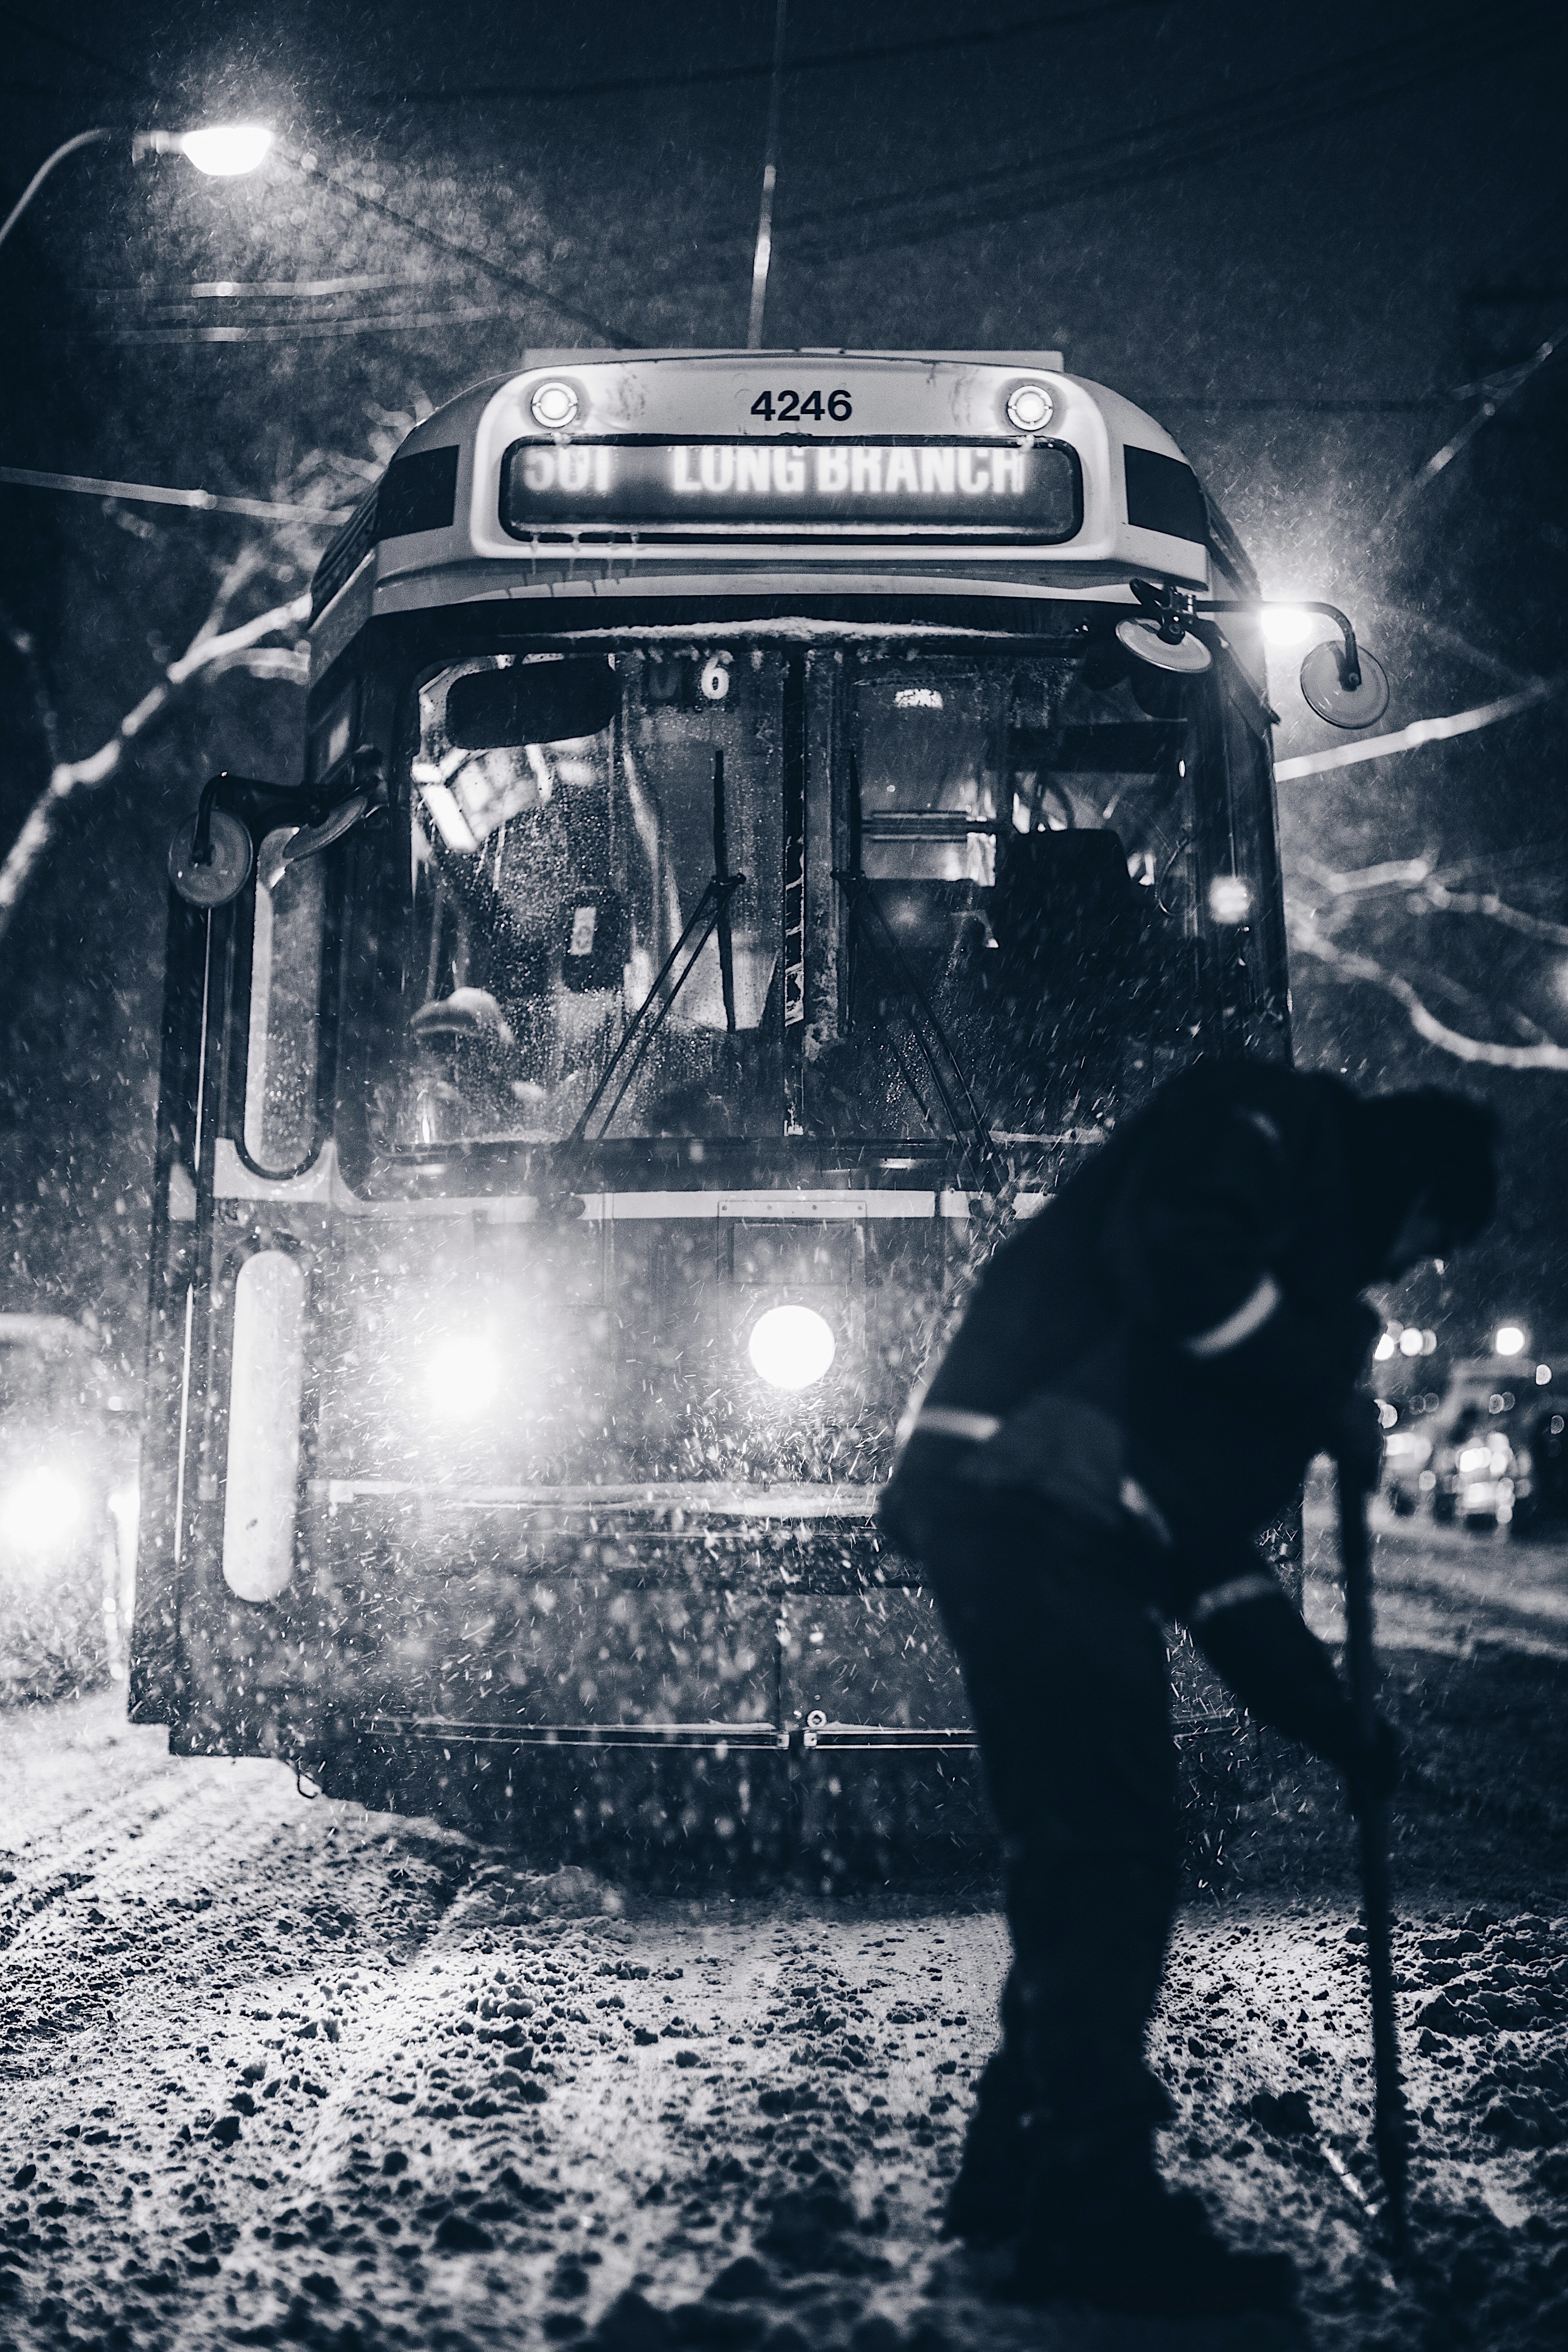 Driving Bus stuck in the snow- Scott Walsh photo - Unsplash